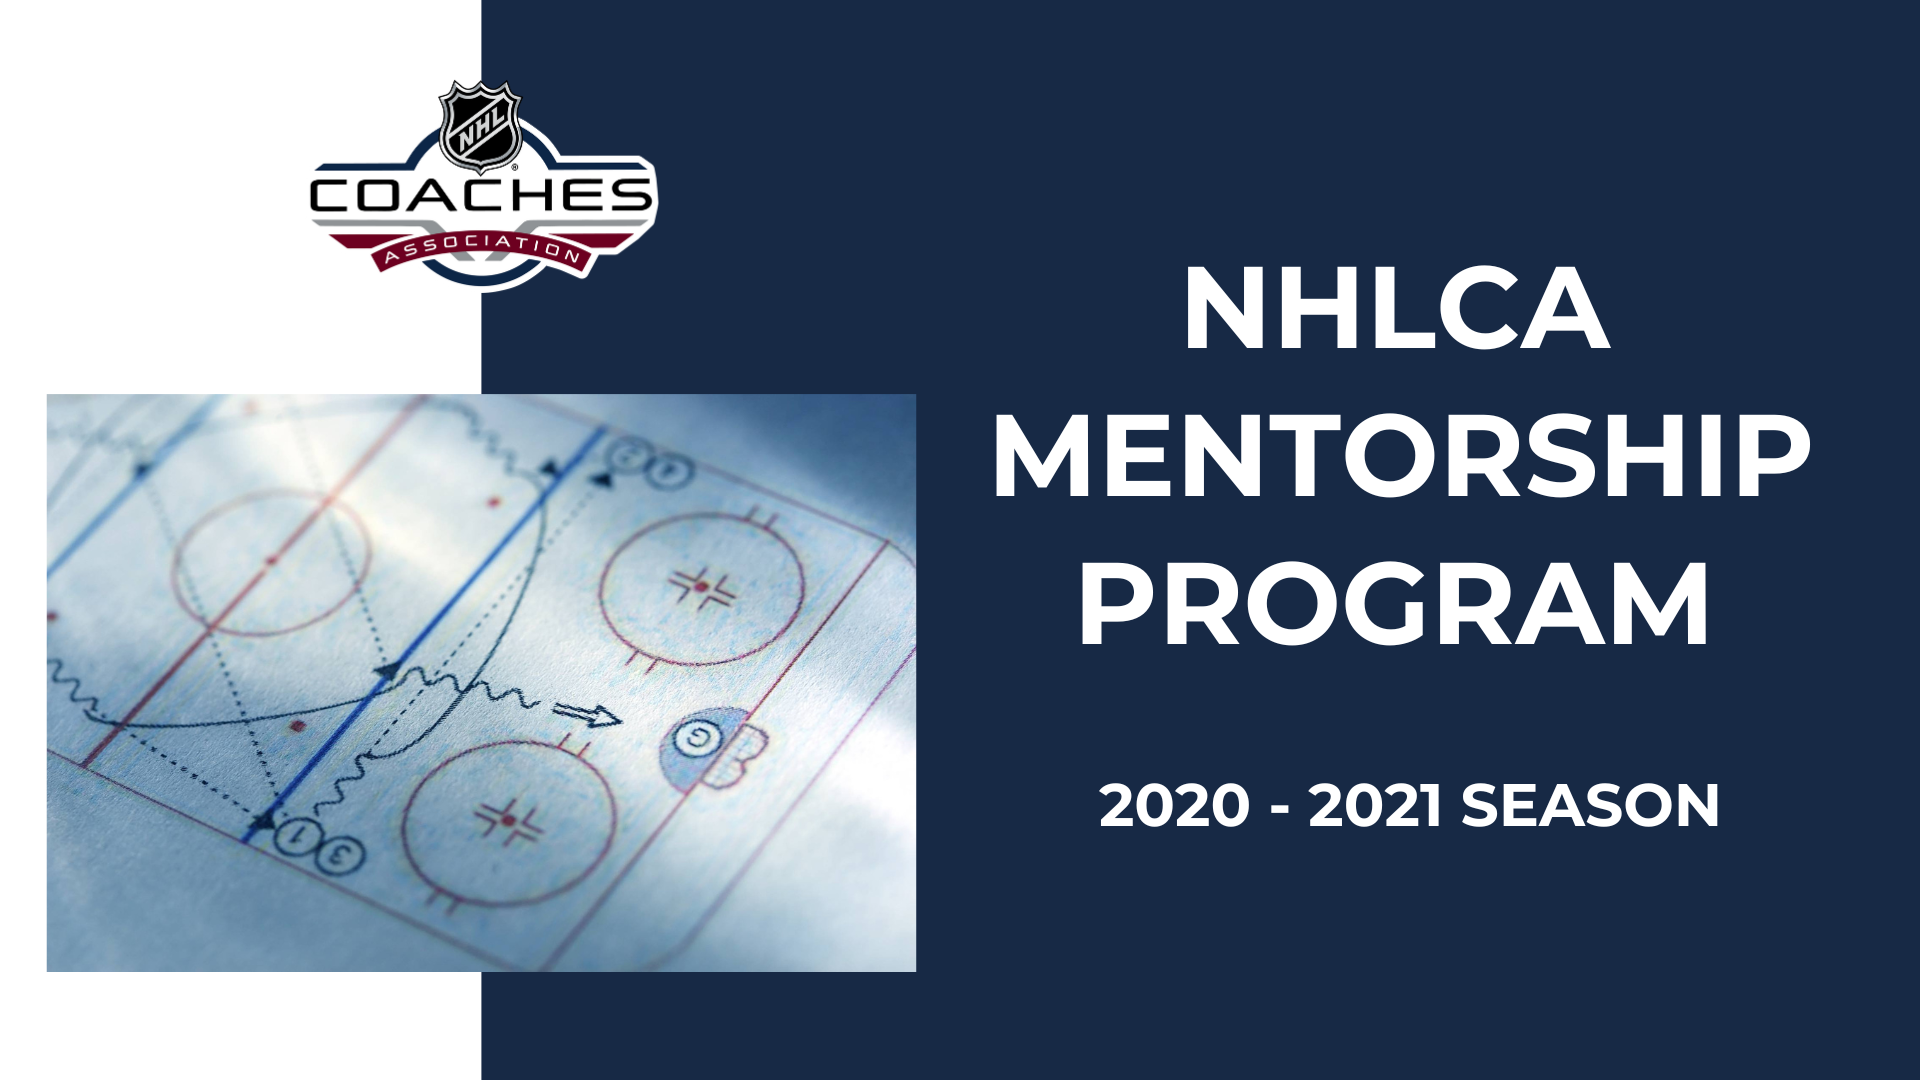 NHLCA Mentorship Program: 2020-2021 Season